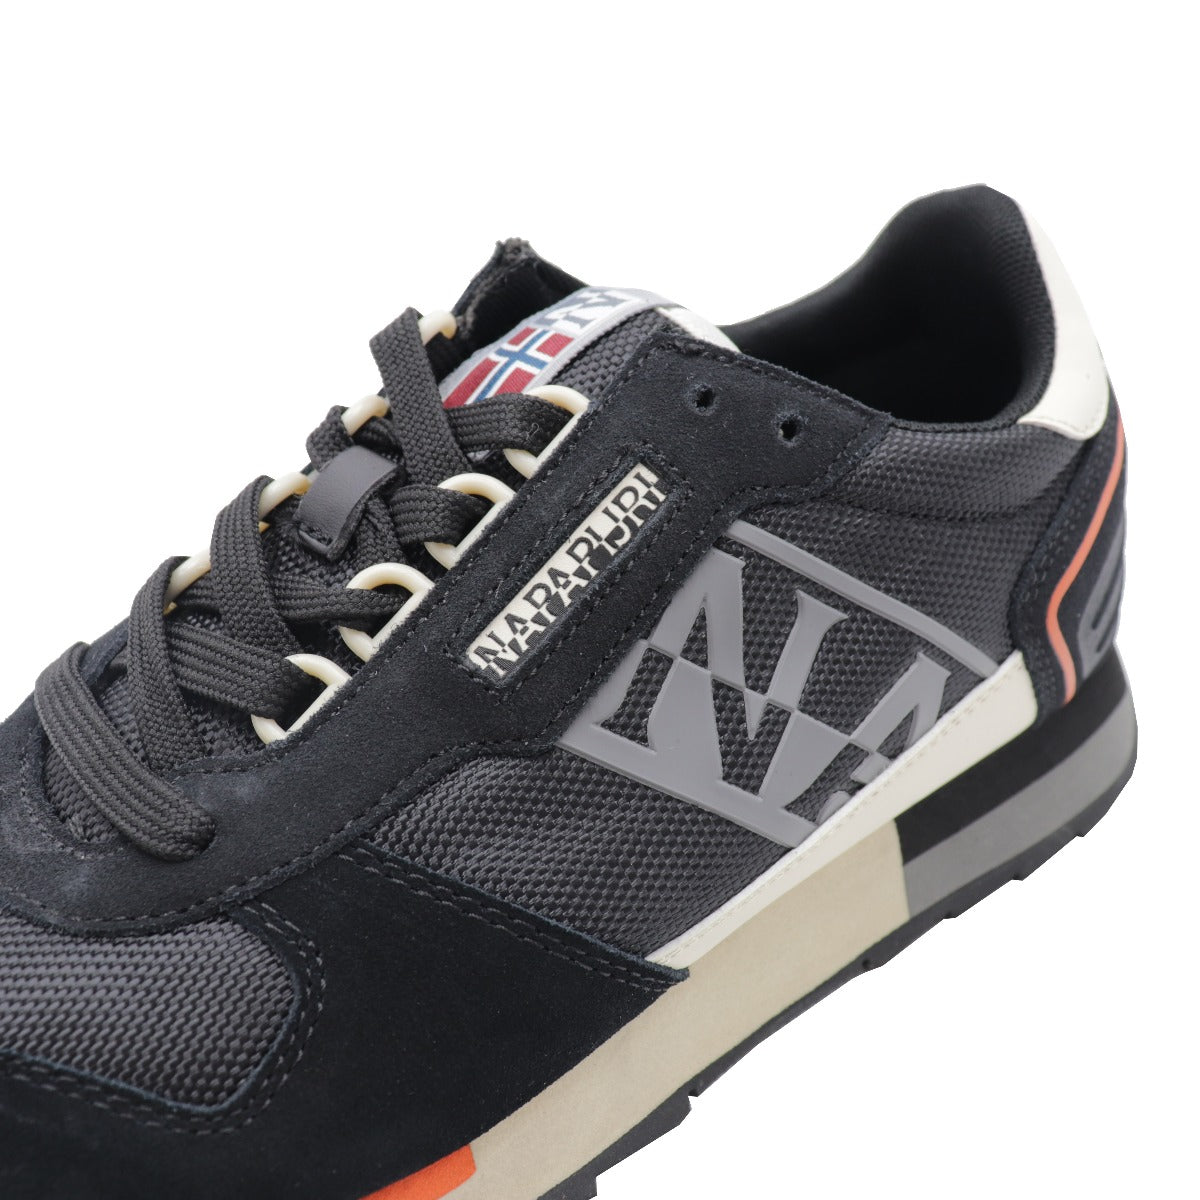 Napapijri Men's Gray and Black Suede Nylon Sneakers